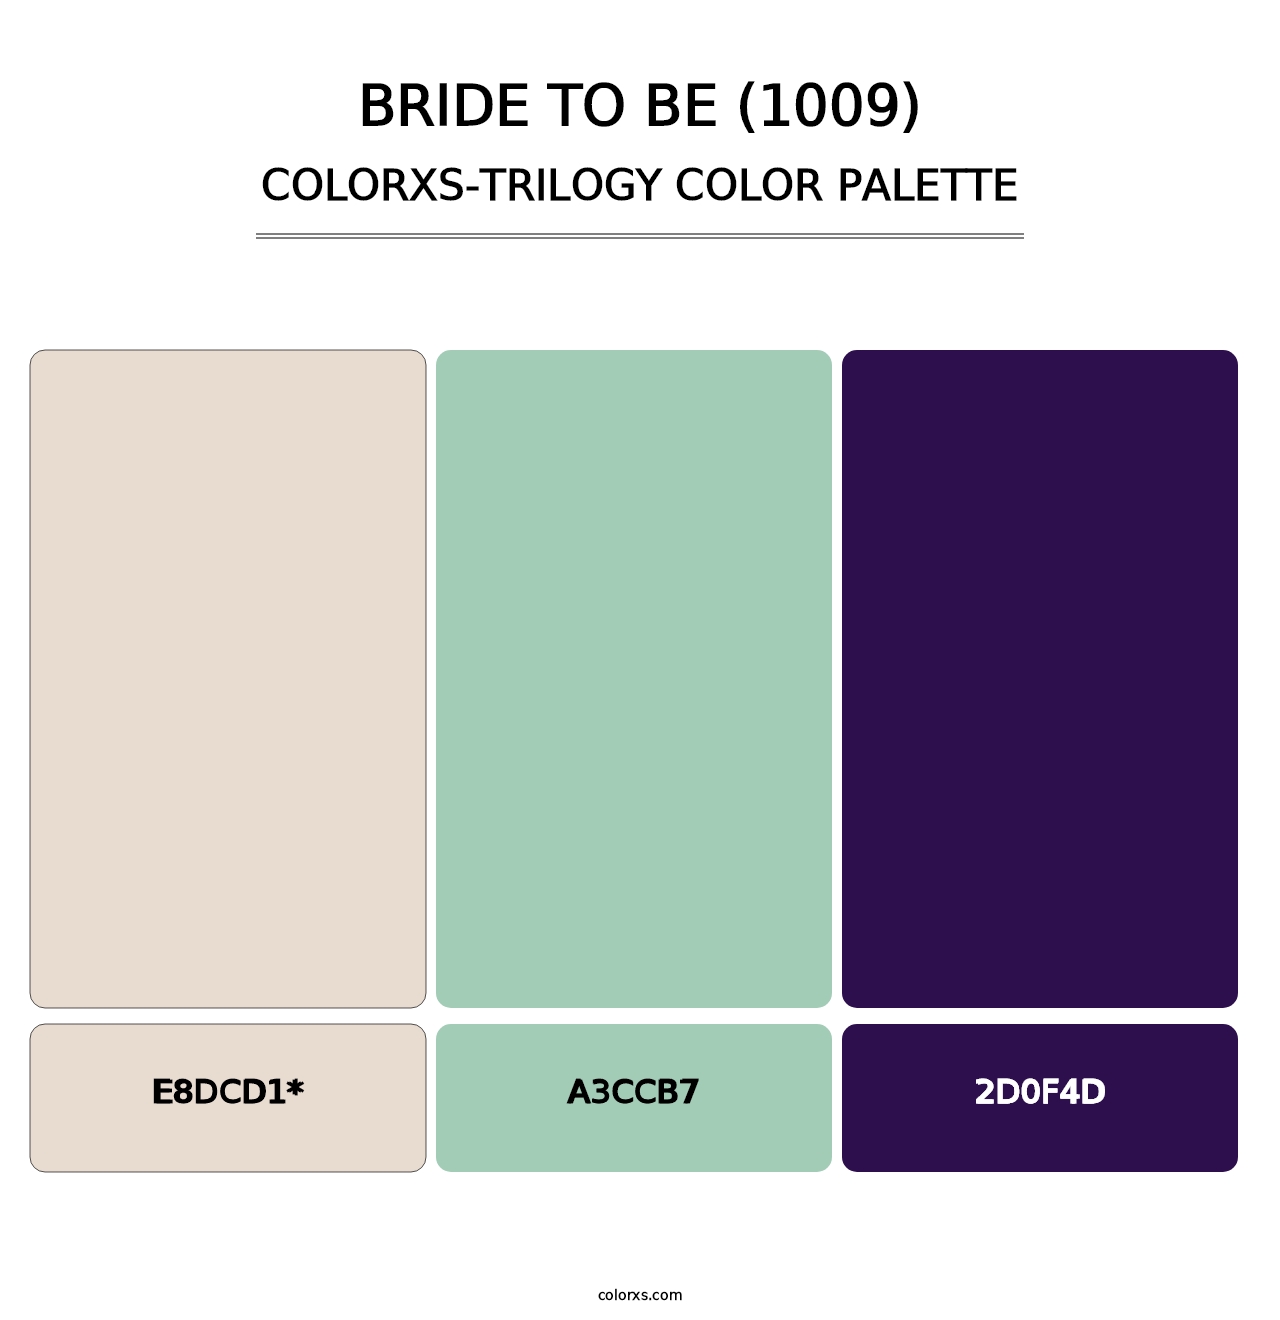 Bride To Be (1009) - Colorxs Trilogy Palette